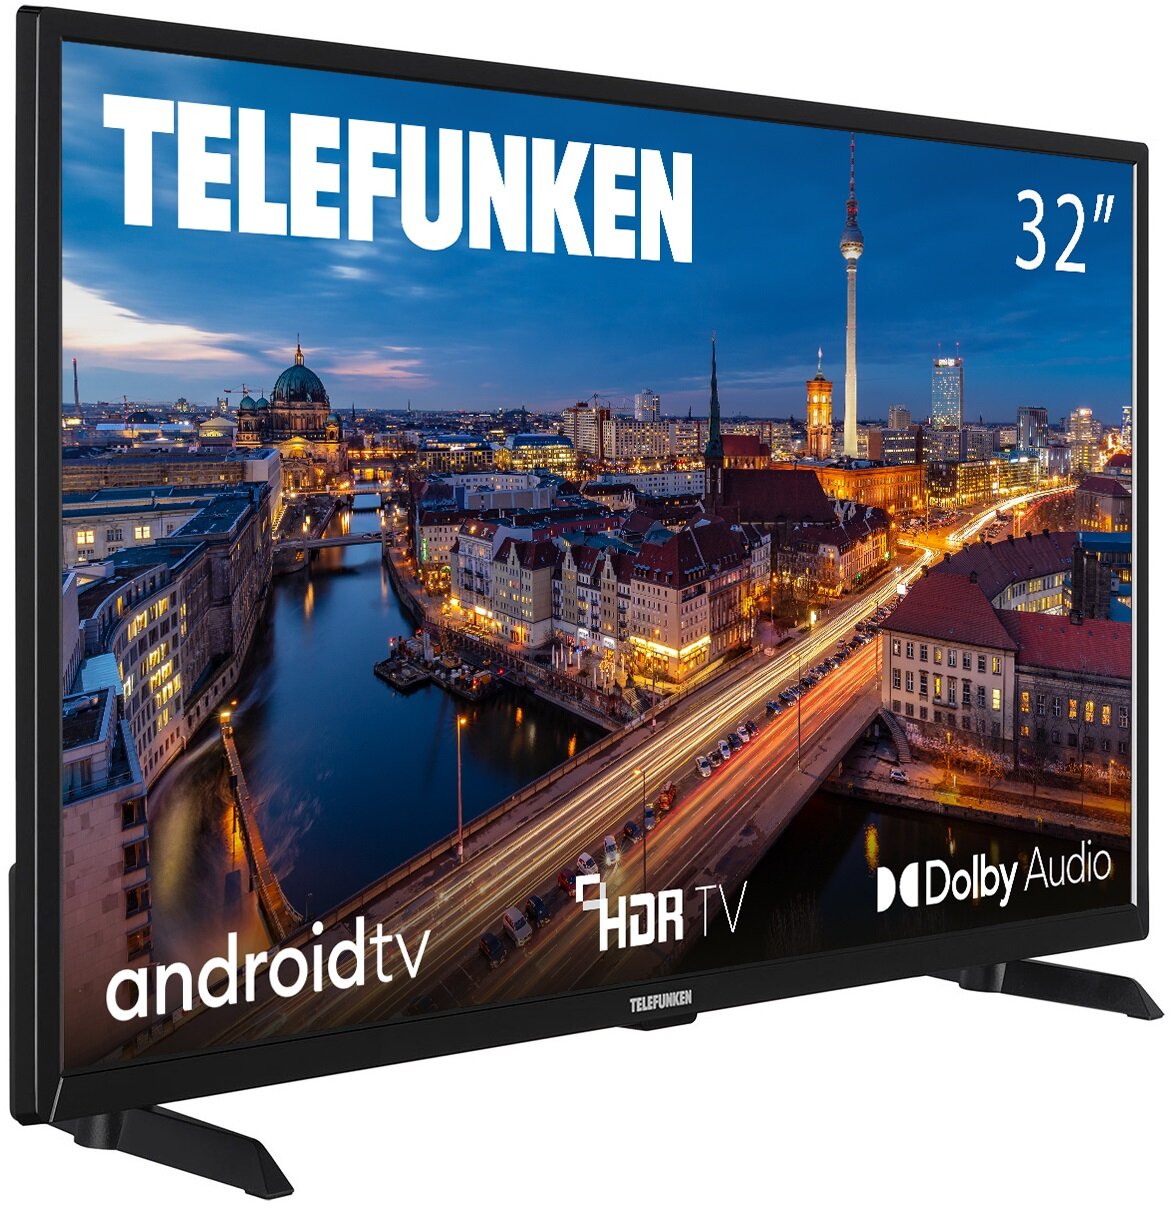 Telewizor Led Telefunken Hg Android Tv Sklep Opinie Cena W Hot Sex Picture 3241